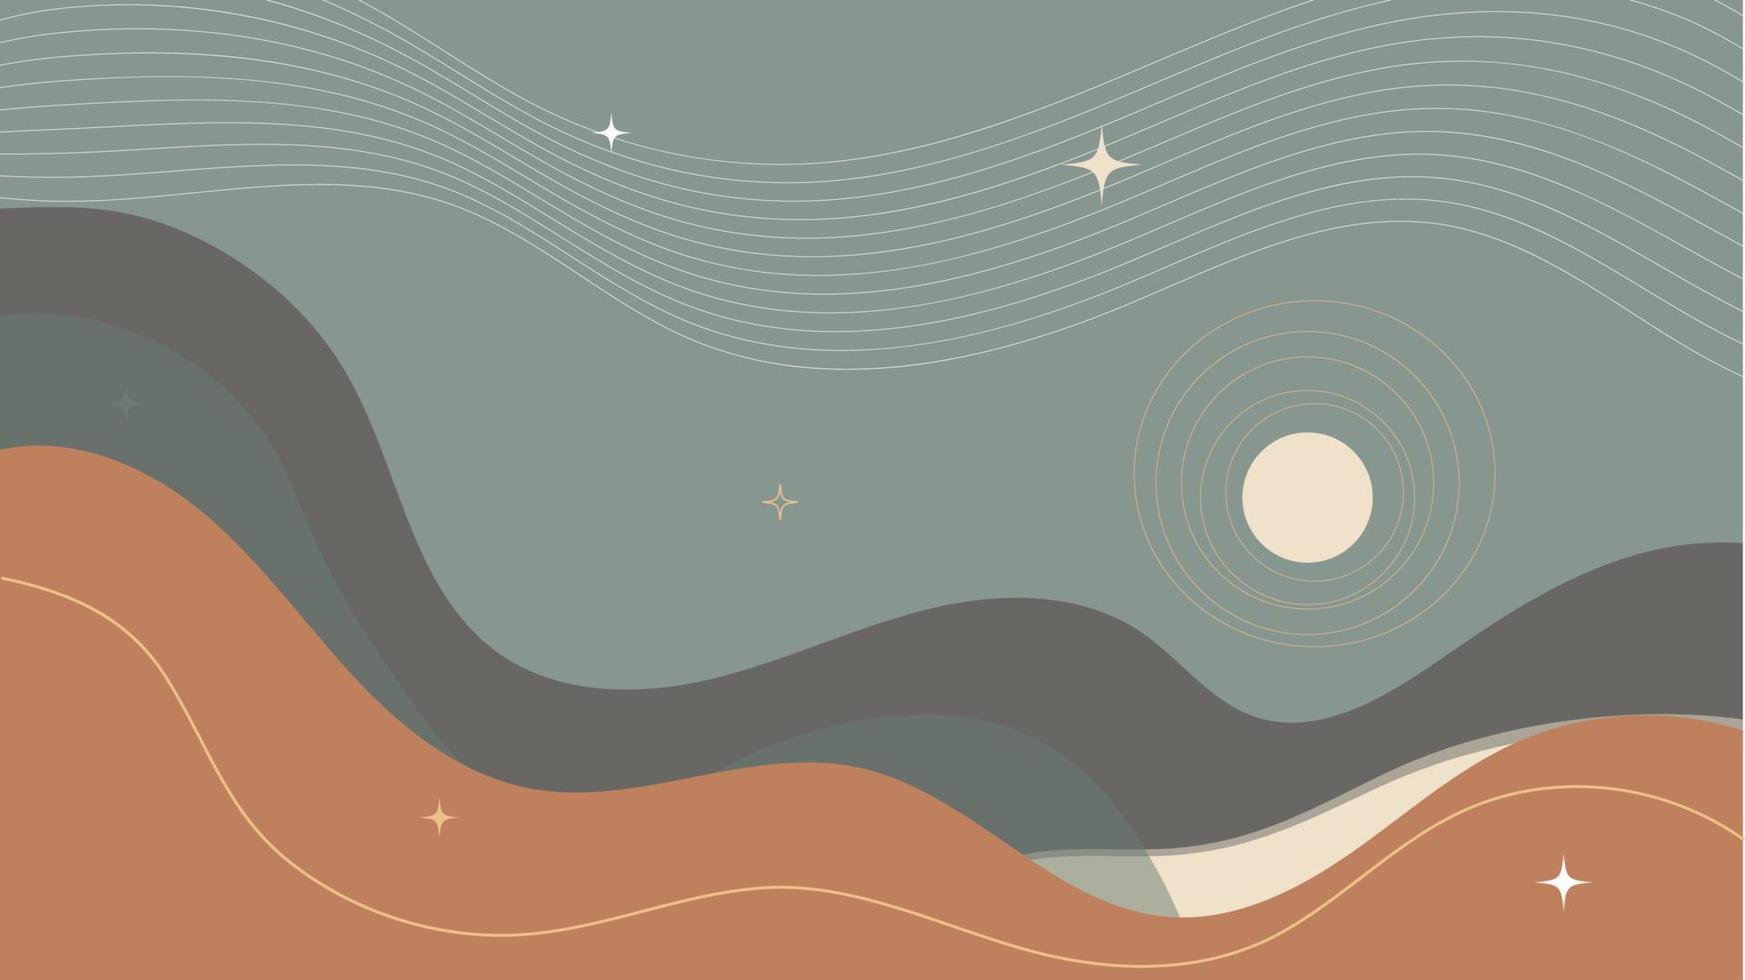 cartel de paisaje contemporáneo abstracto. fondo boho moderno con montañas lunares, decoración de pared minimalista. impresión de arte vectorial vector